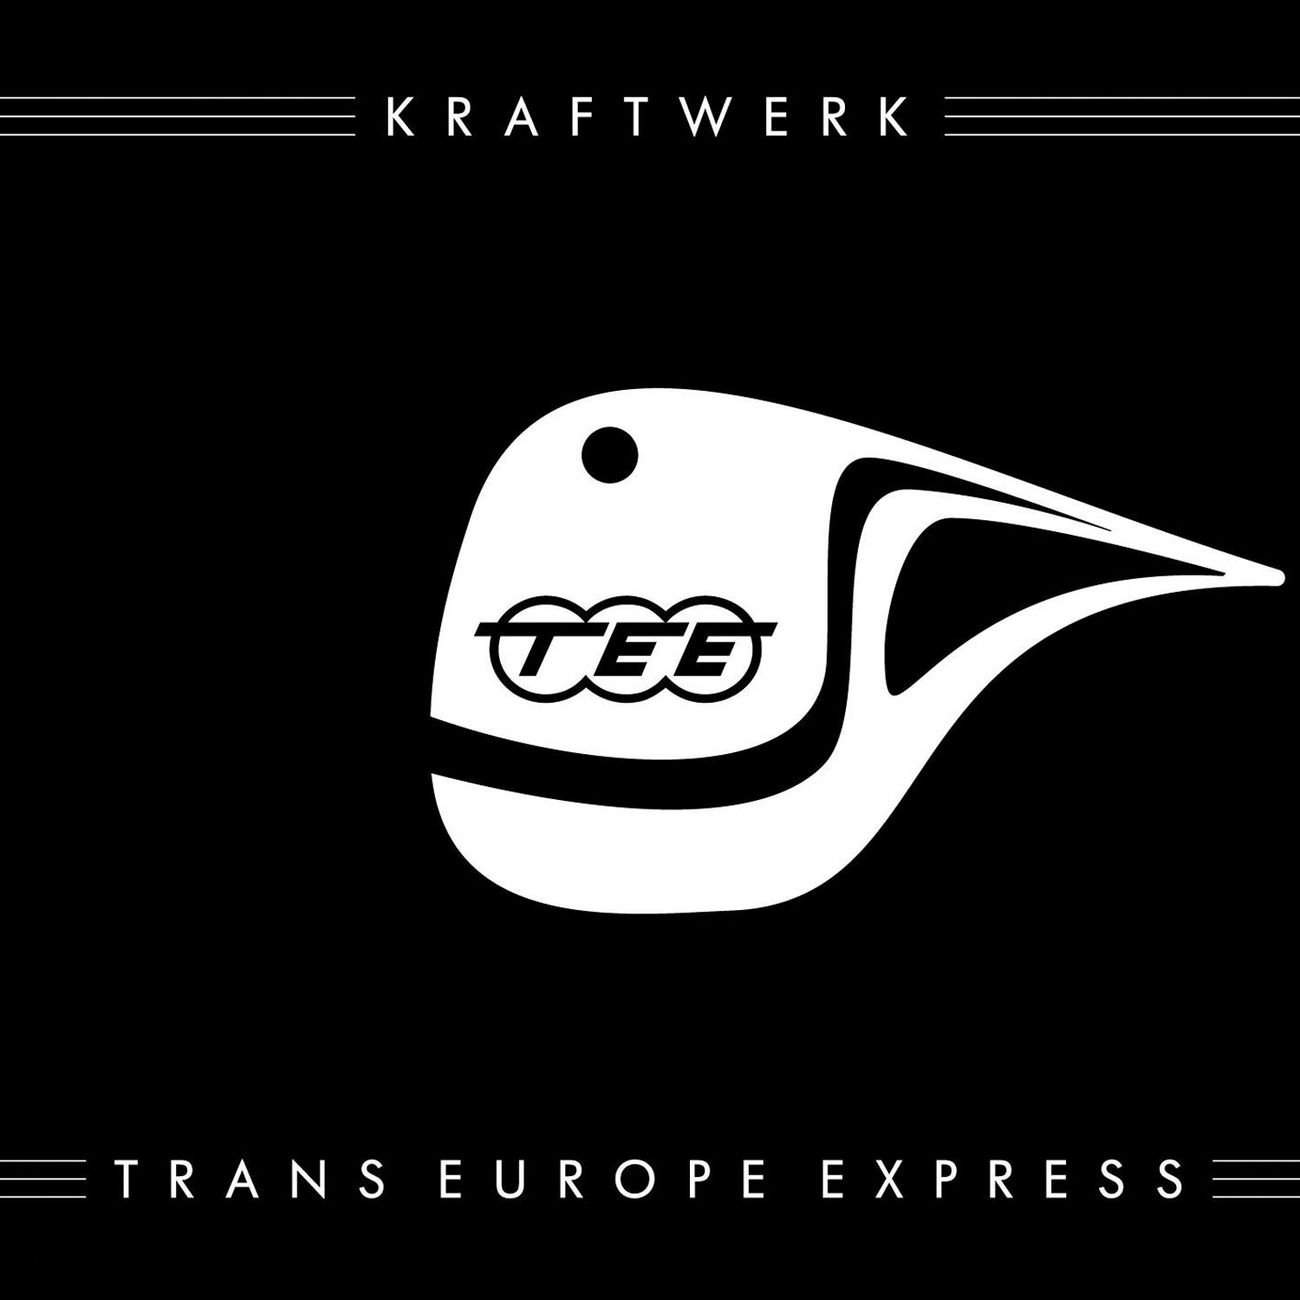 Kraftwerk-Trans-Europe-Express-vinyl-record-album1